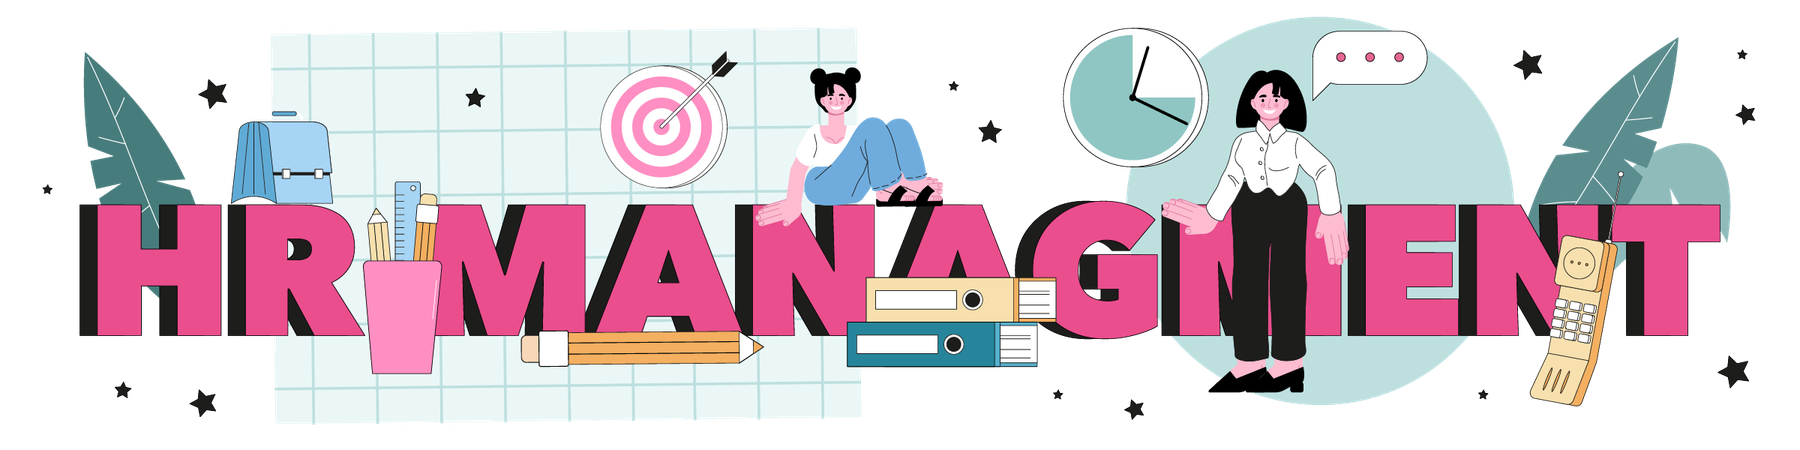 Human resources management typographic header. Recruitment and teamwork  Illustration